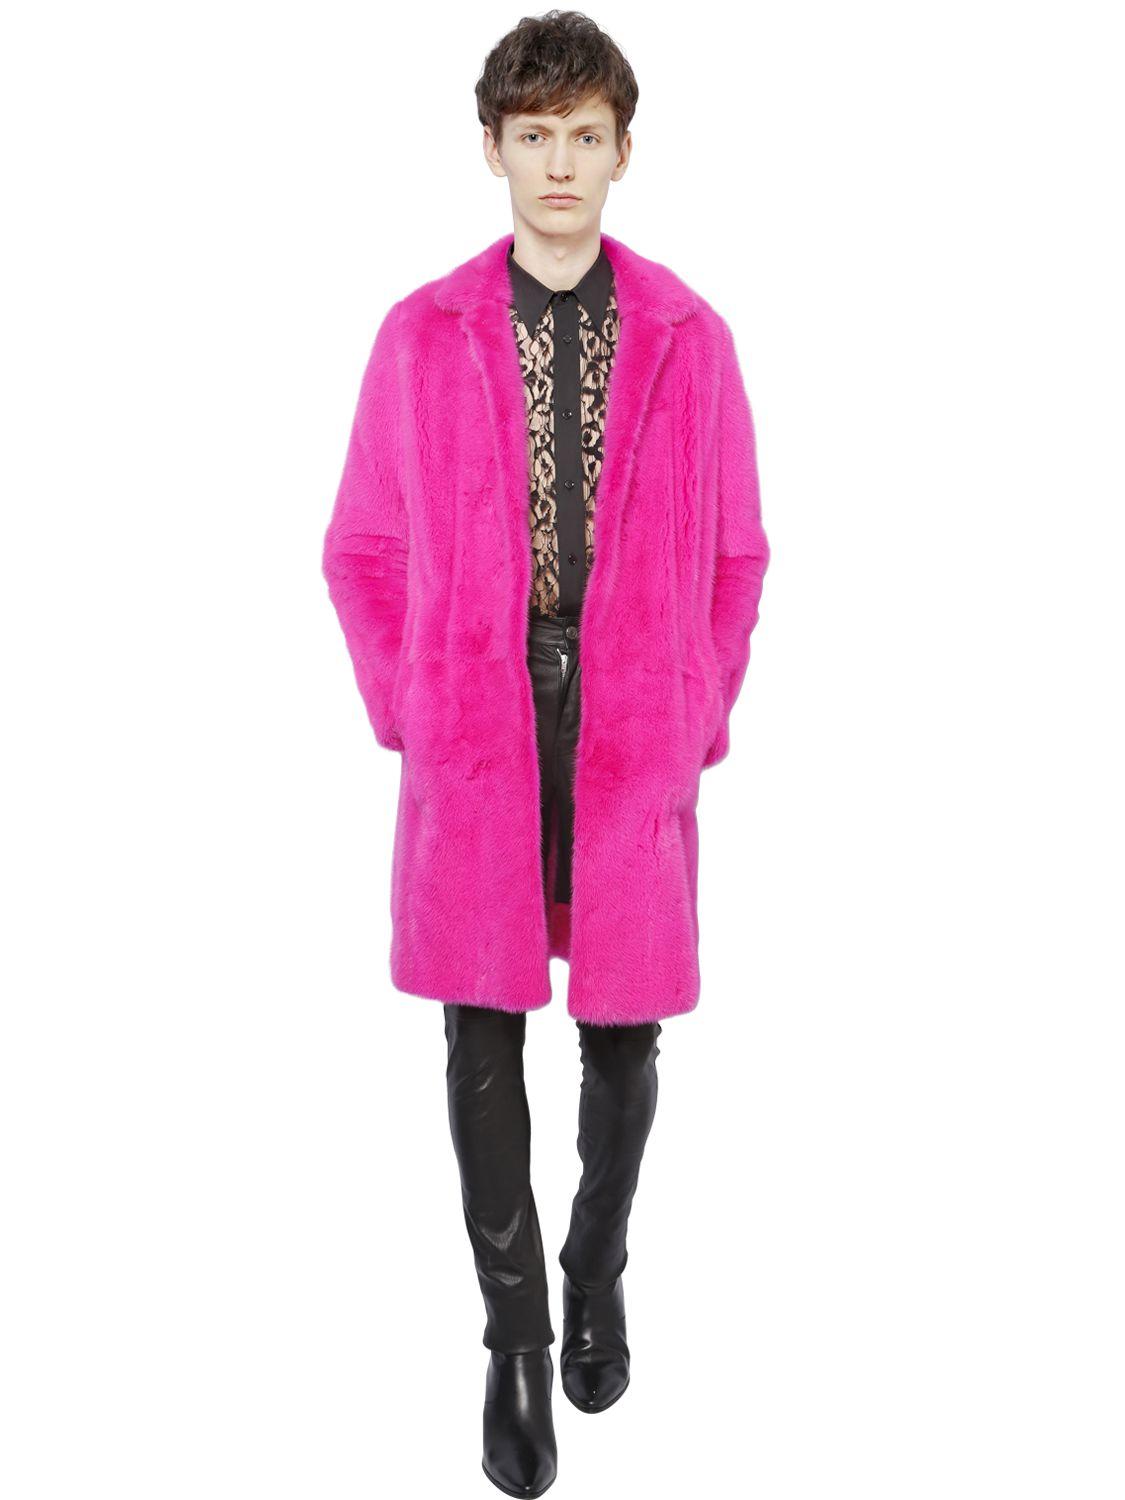 Saint Laurent Mink Fur Coat in Fuchsia (Pink) for Men - Lyst